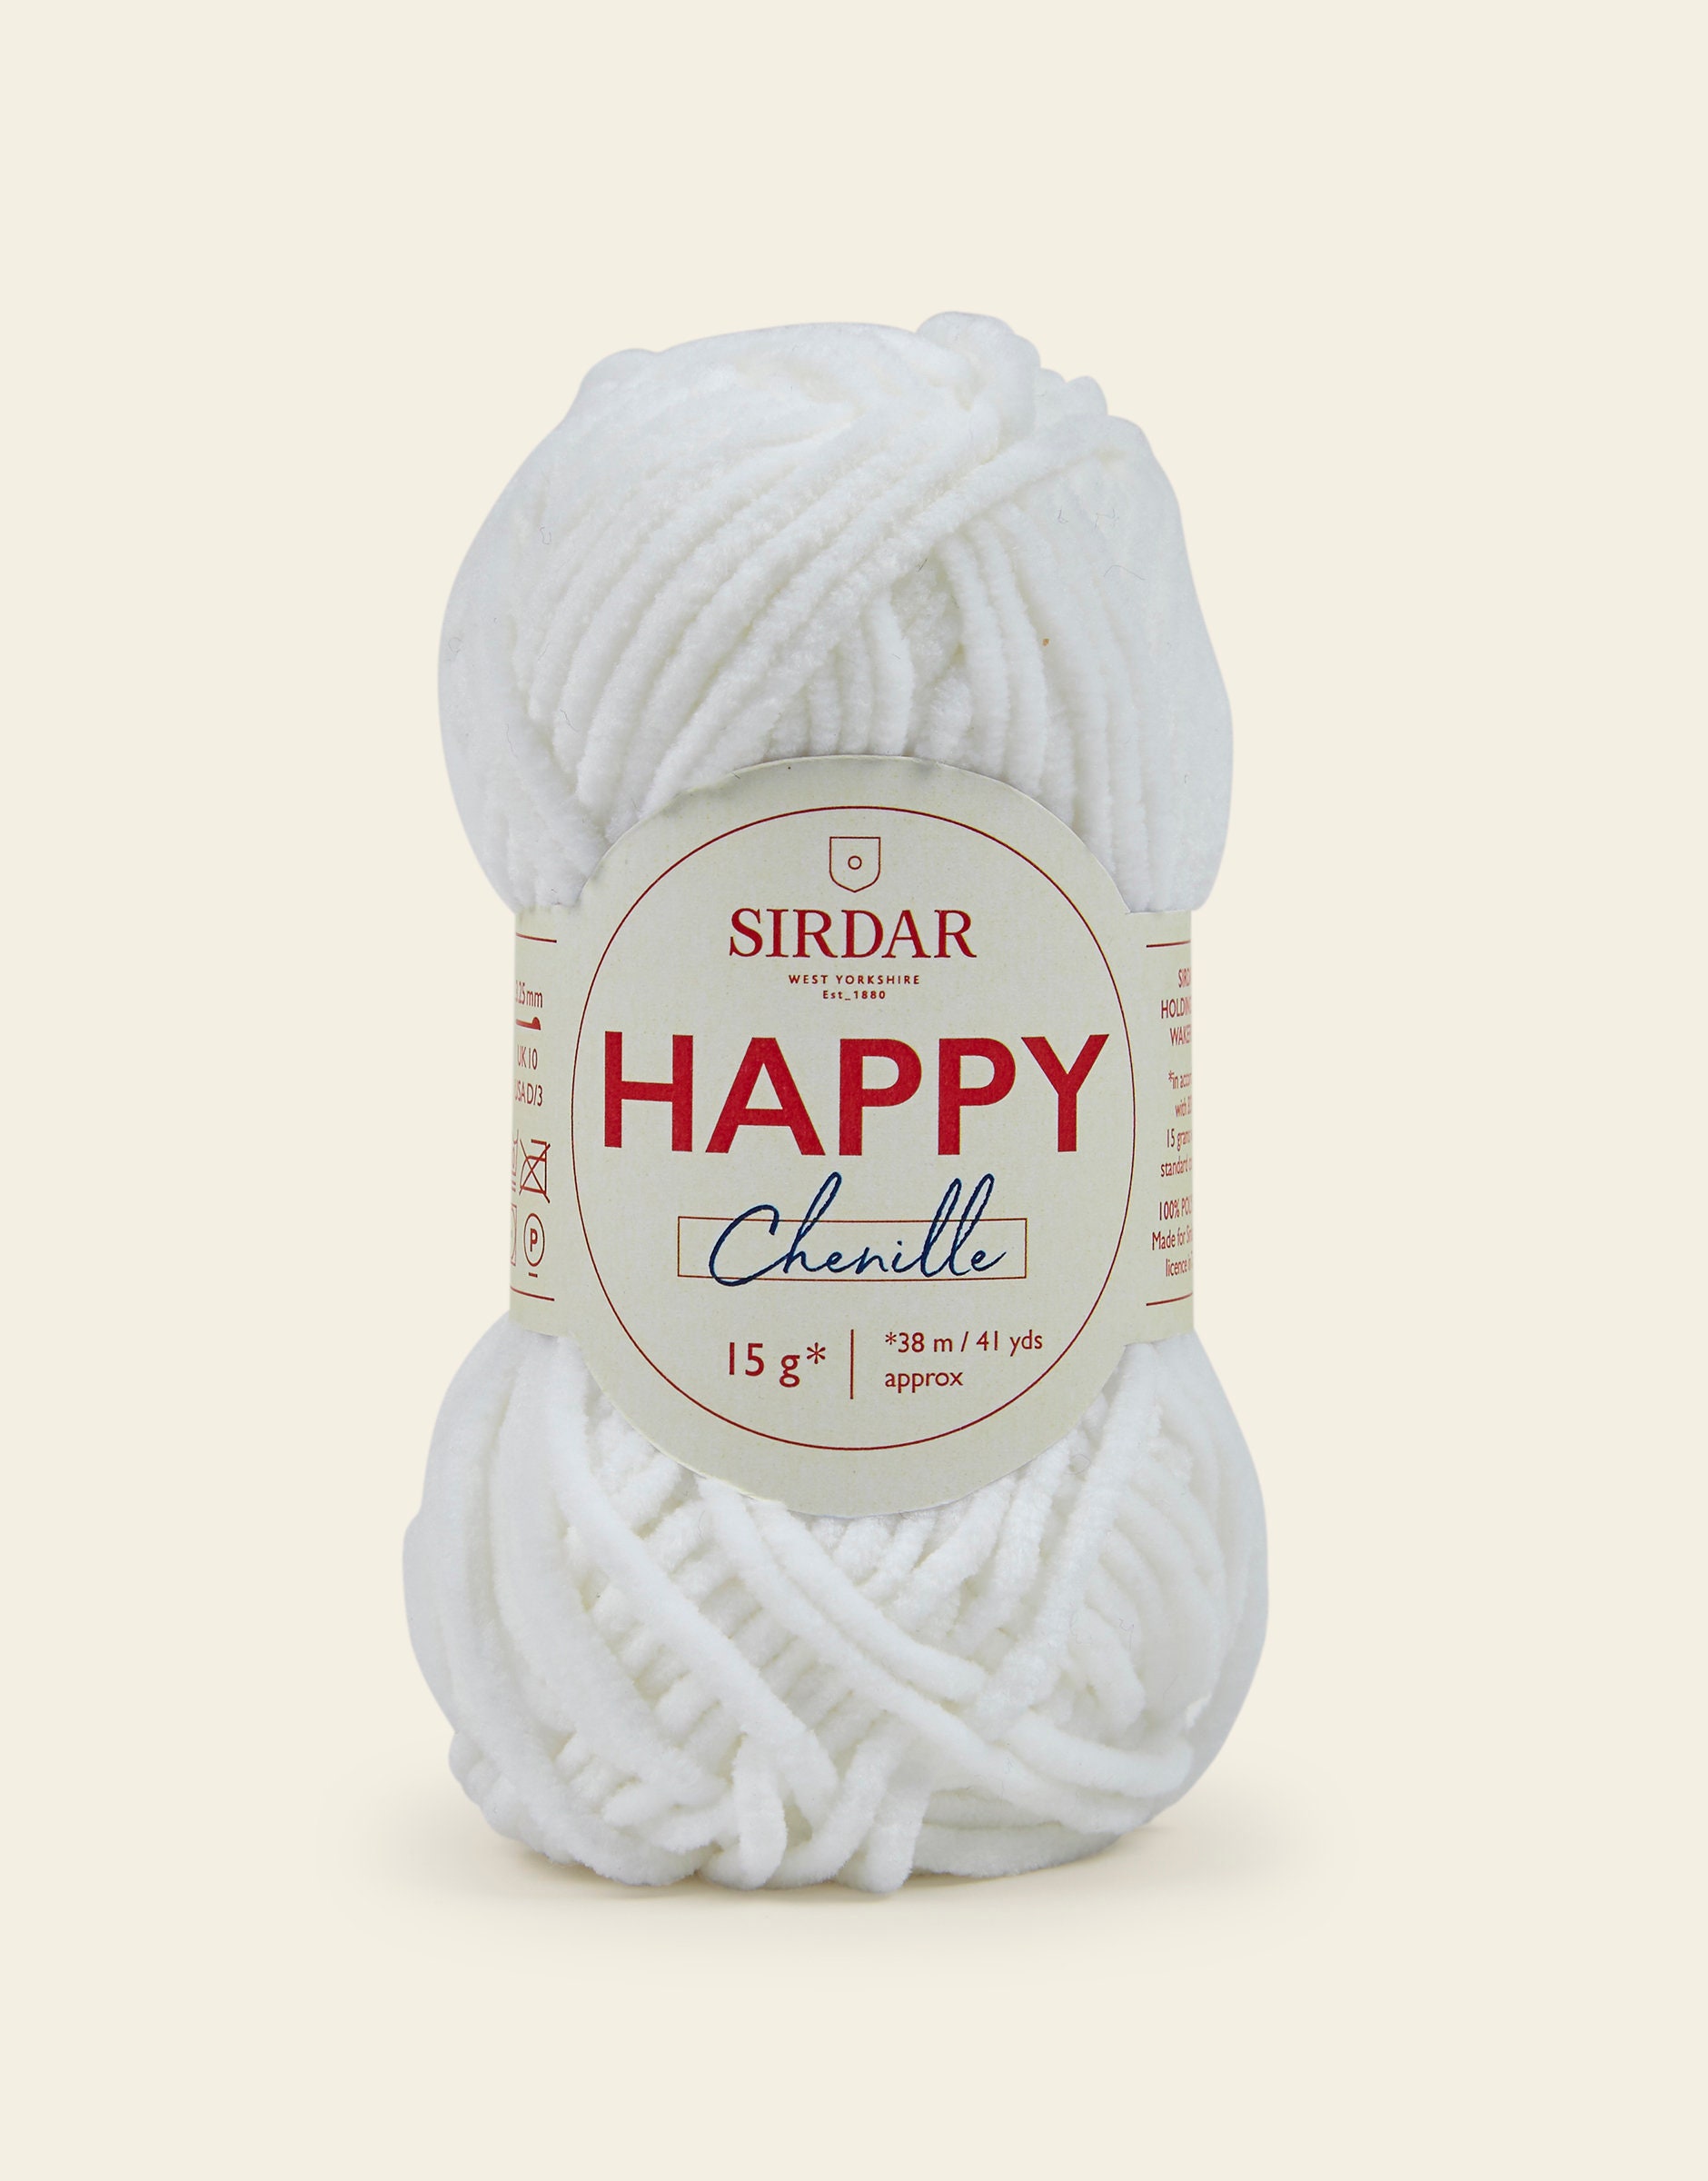 Sirdar Happy Chenille Amigurumi Yarn - The Cheap Shop Tiptree